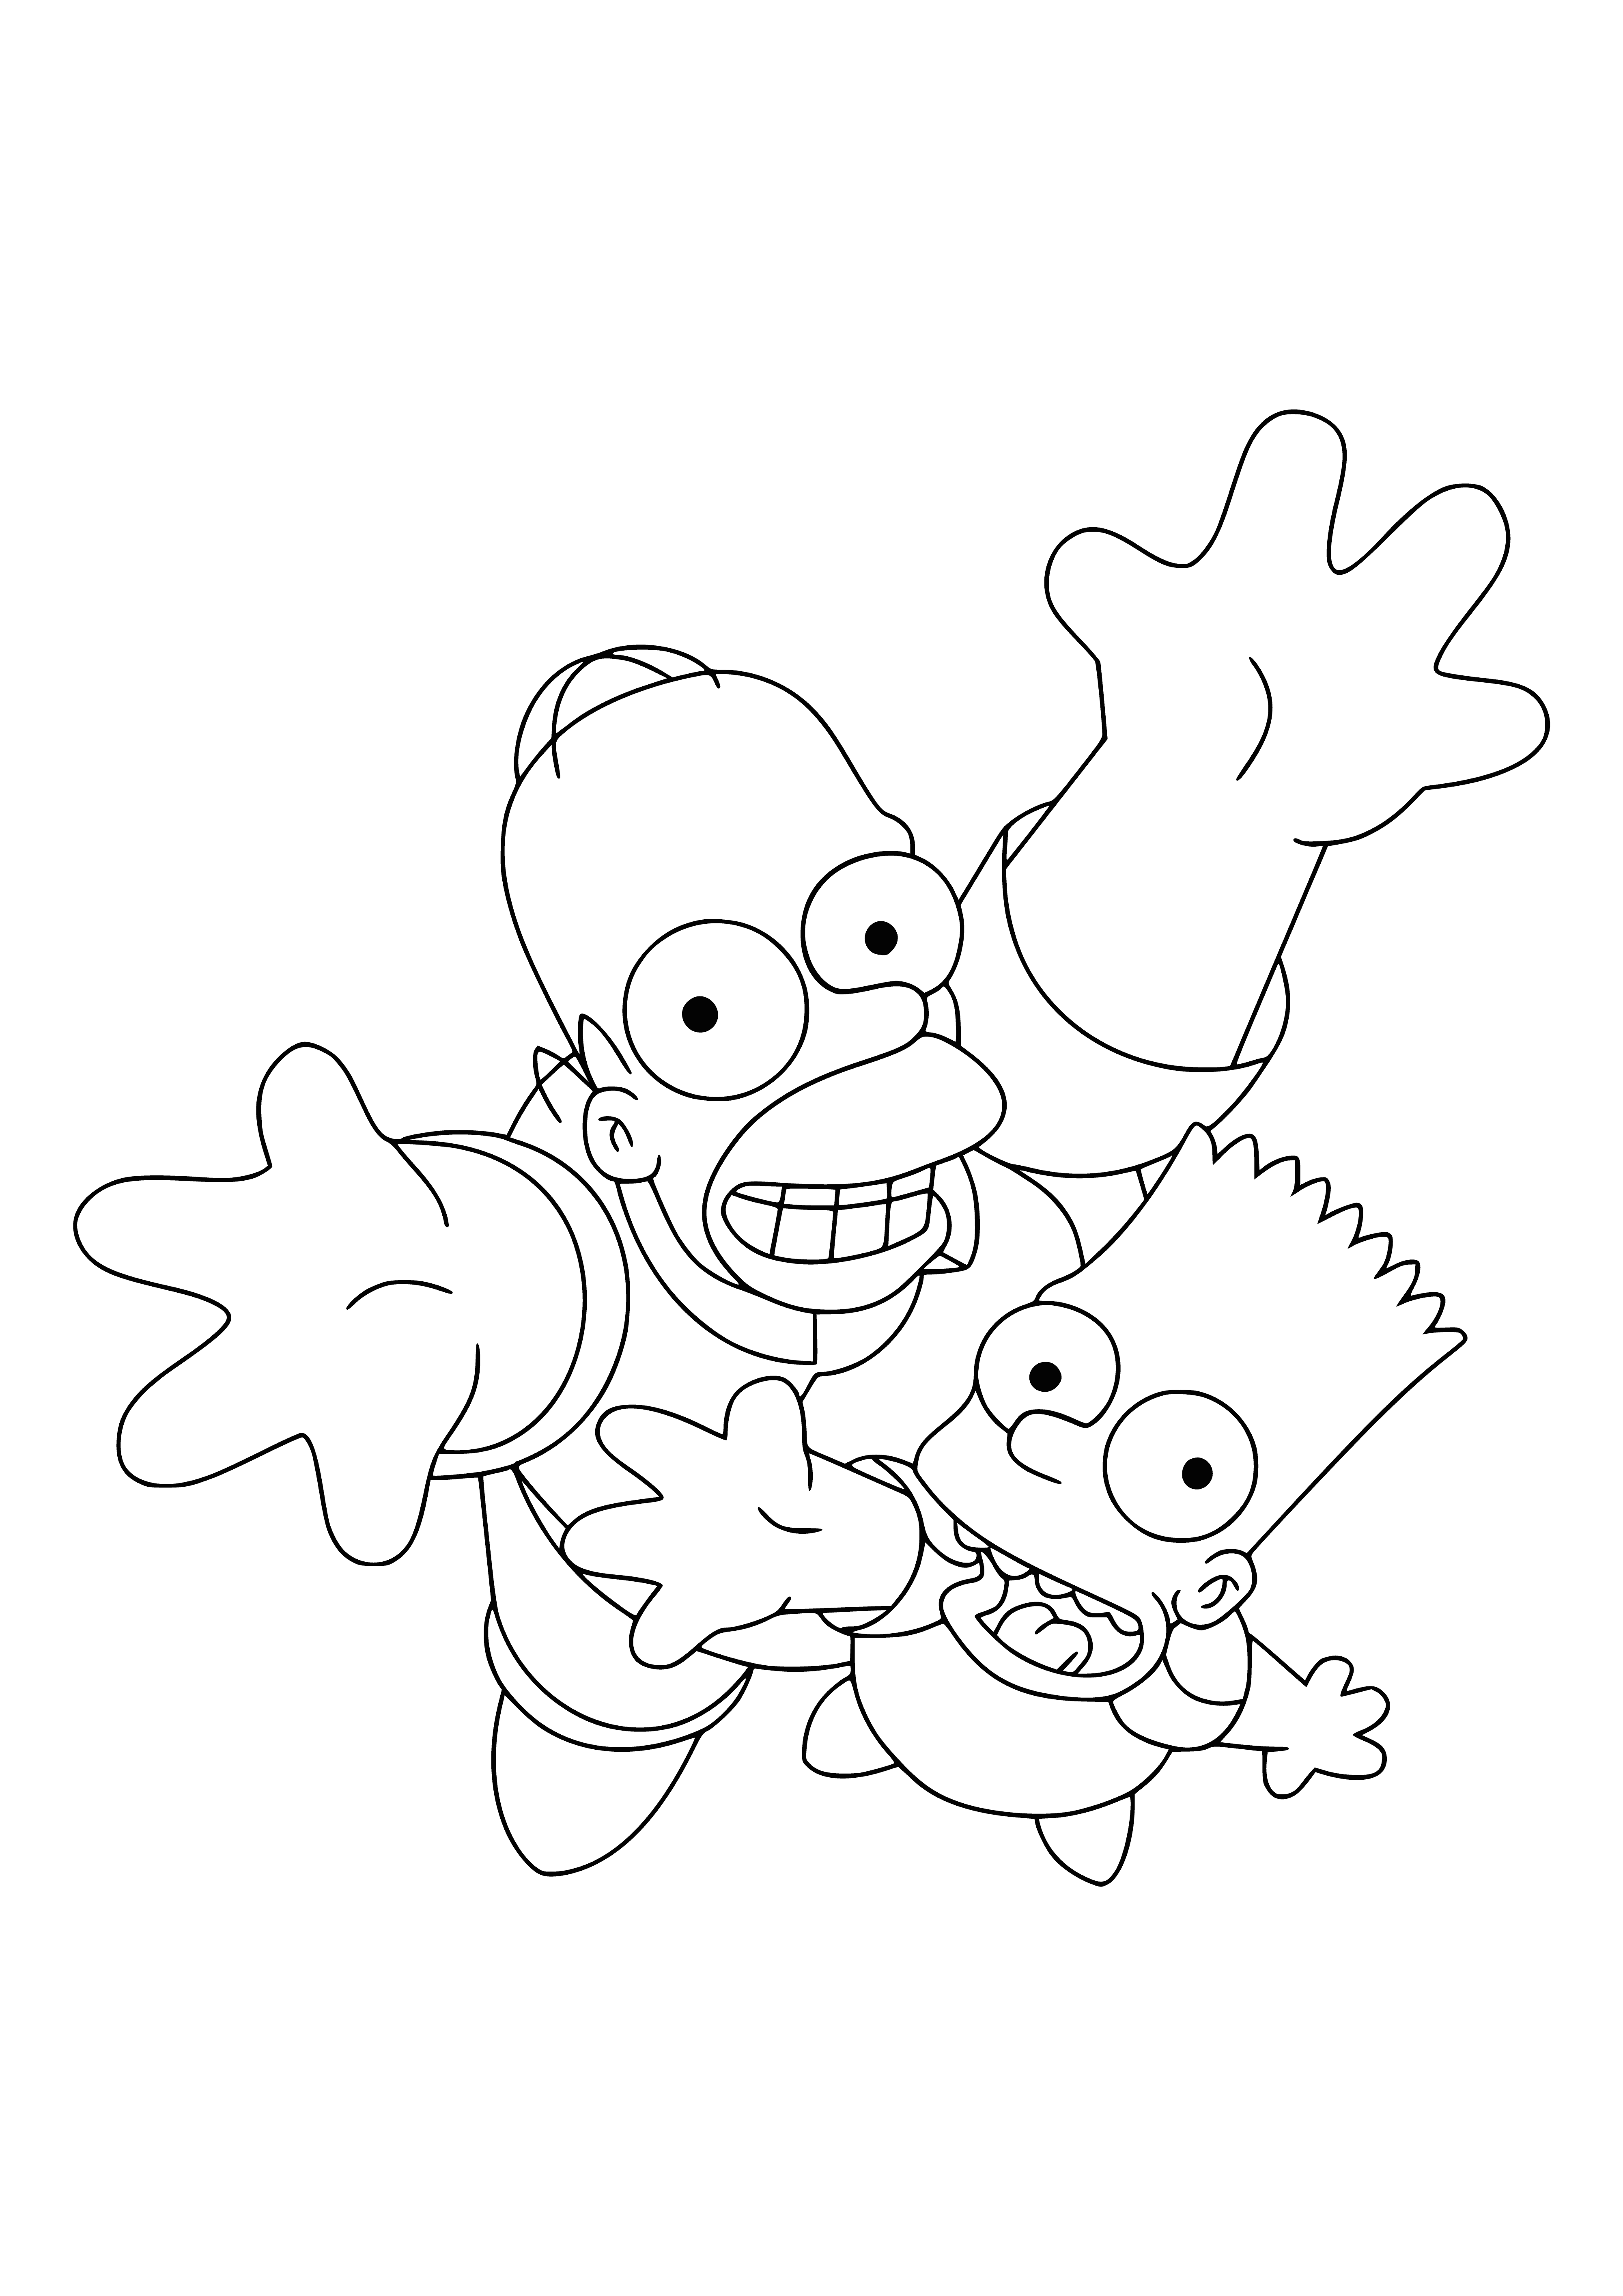 Homer et Bart coloriage